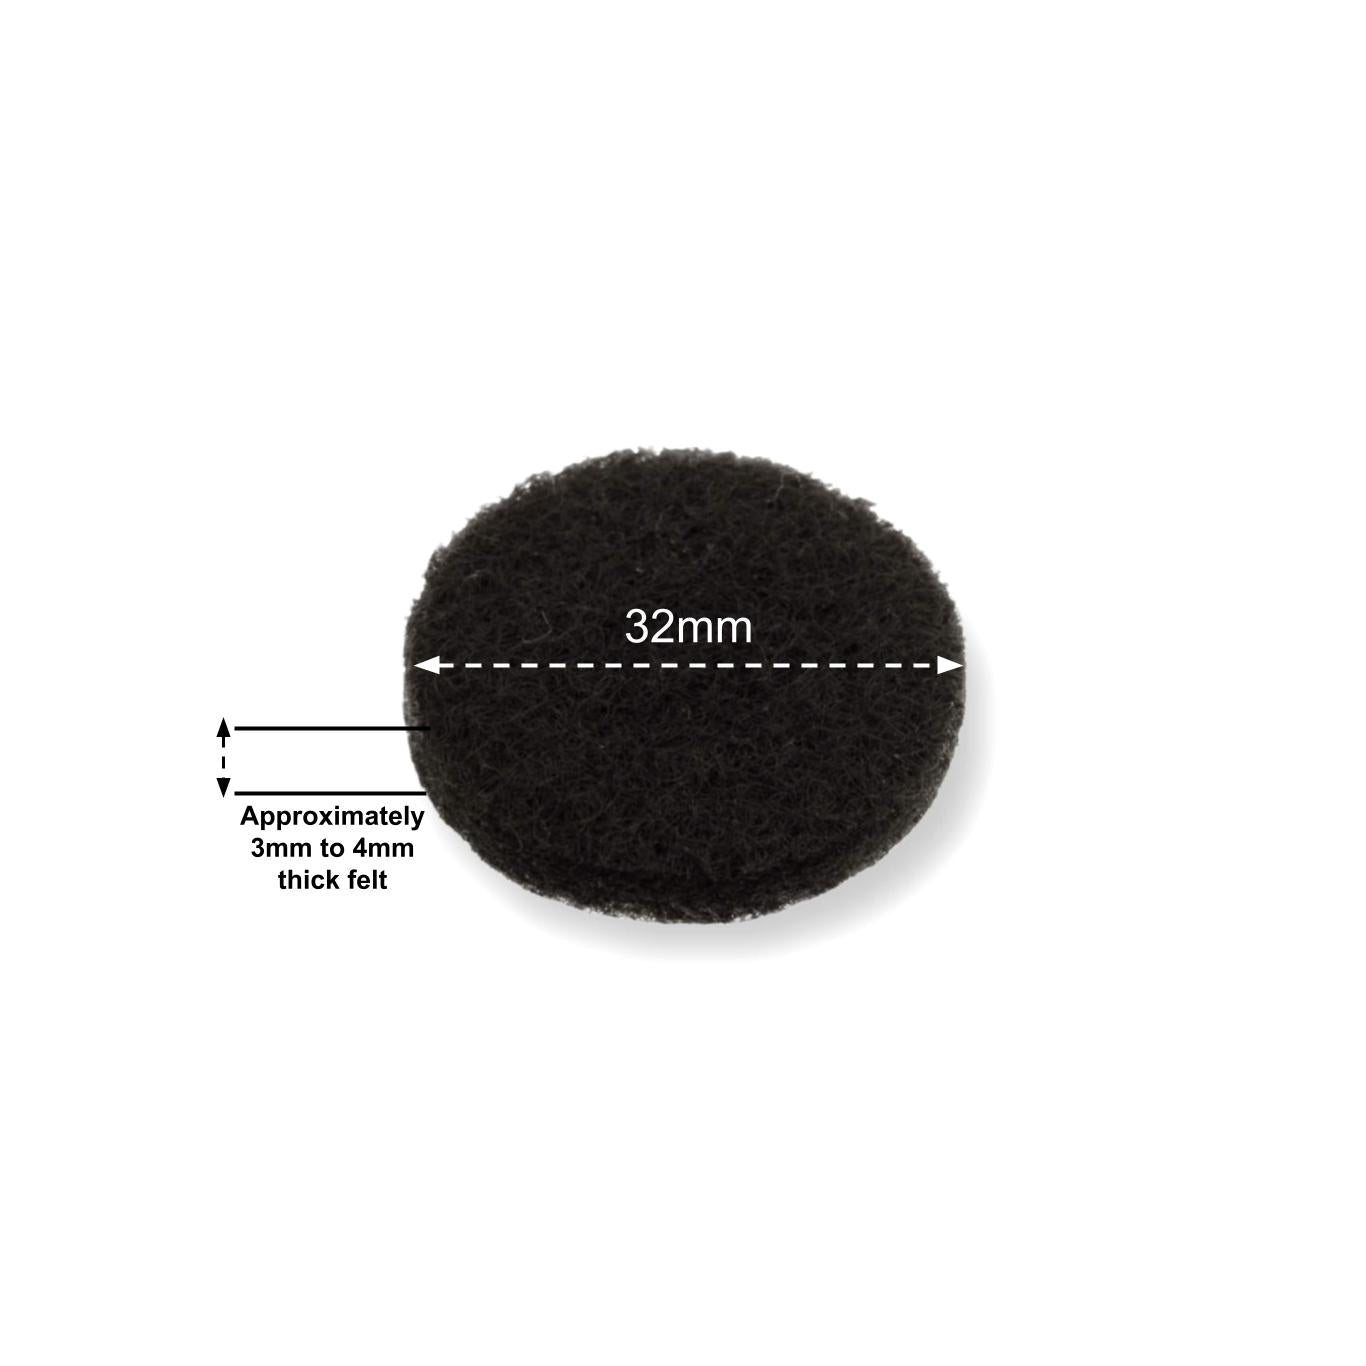 Felt Pads - Dark Brown Self Adhesive Stick on Felt - Round 32mm Diameter - Made in Germany